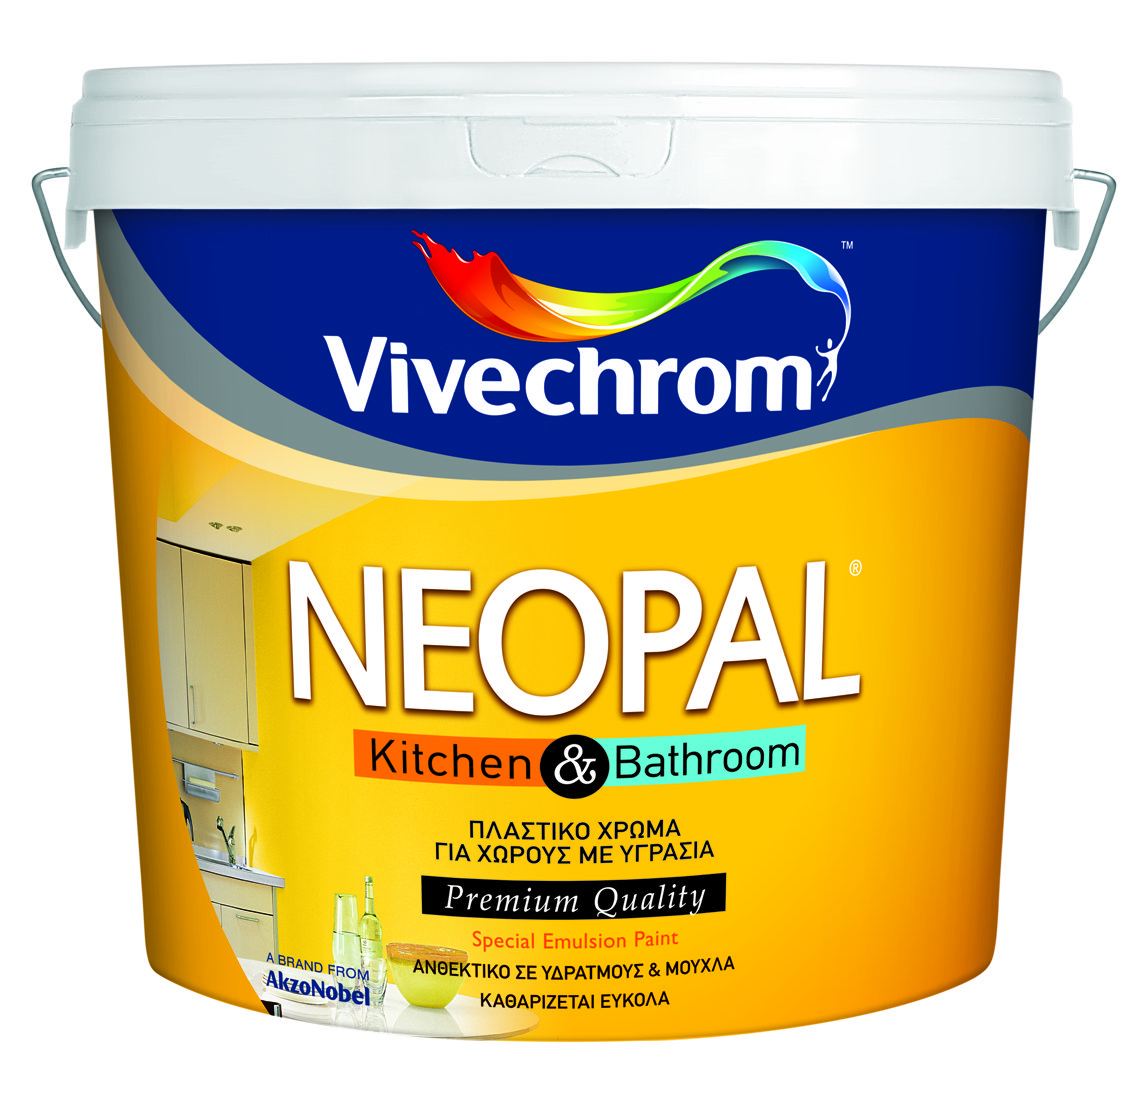 Vivechrom Neopal Kitchen & Bathroom Αντιμικροβιακό Χρώμα για Χώρους με Υγρασία Βάση P 1L